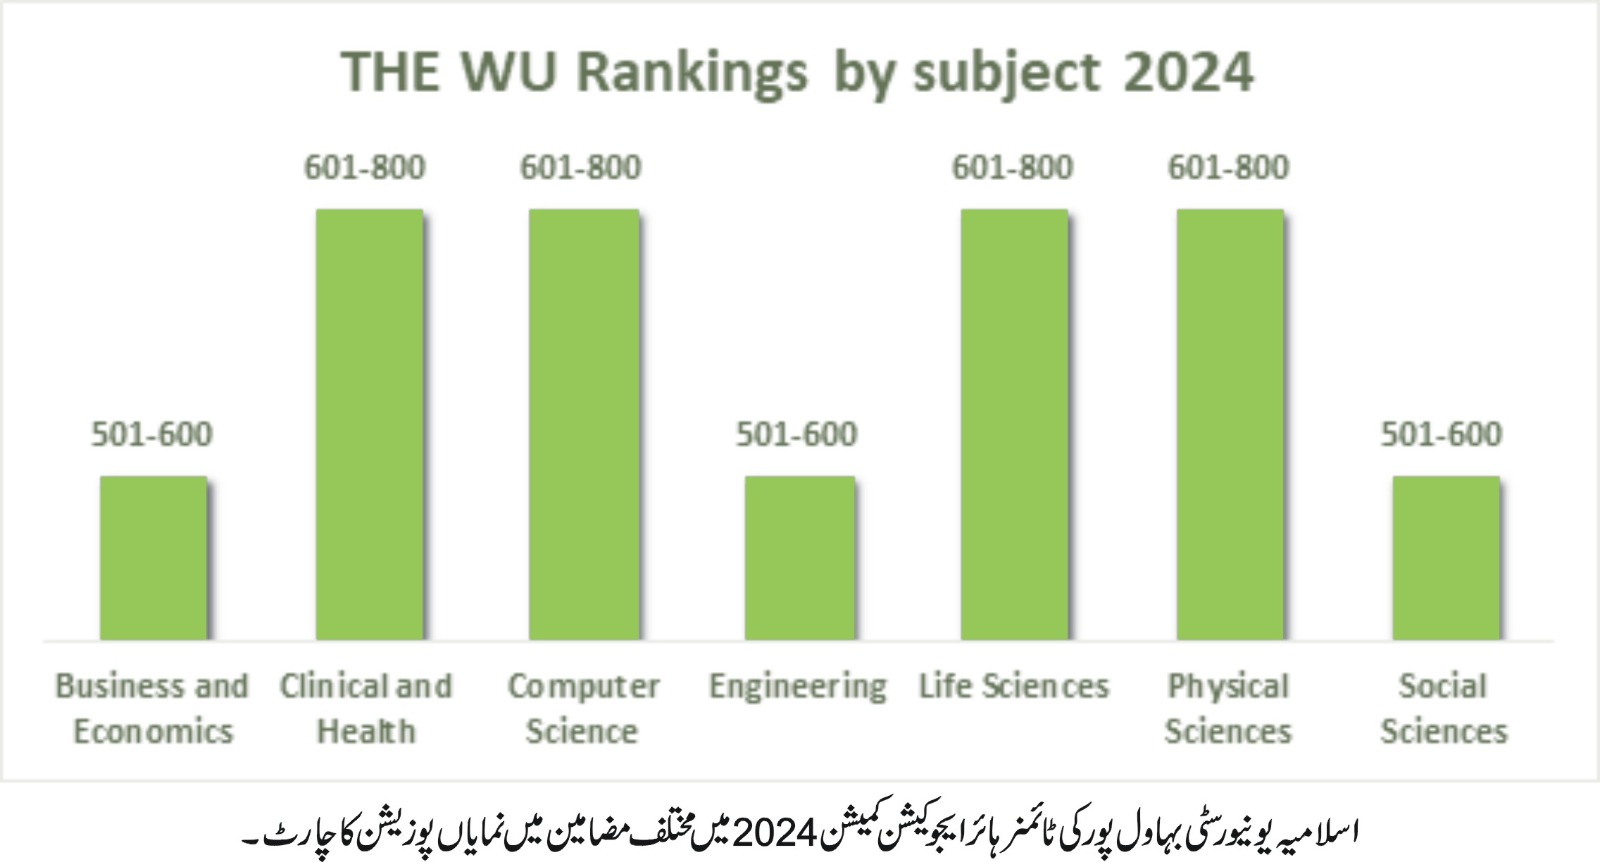 THE ranking urdu